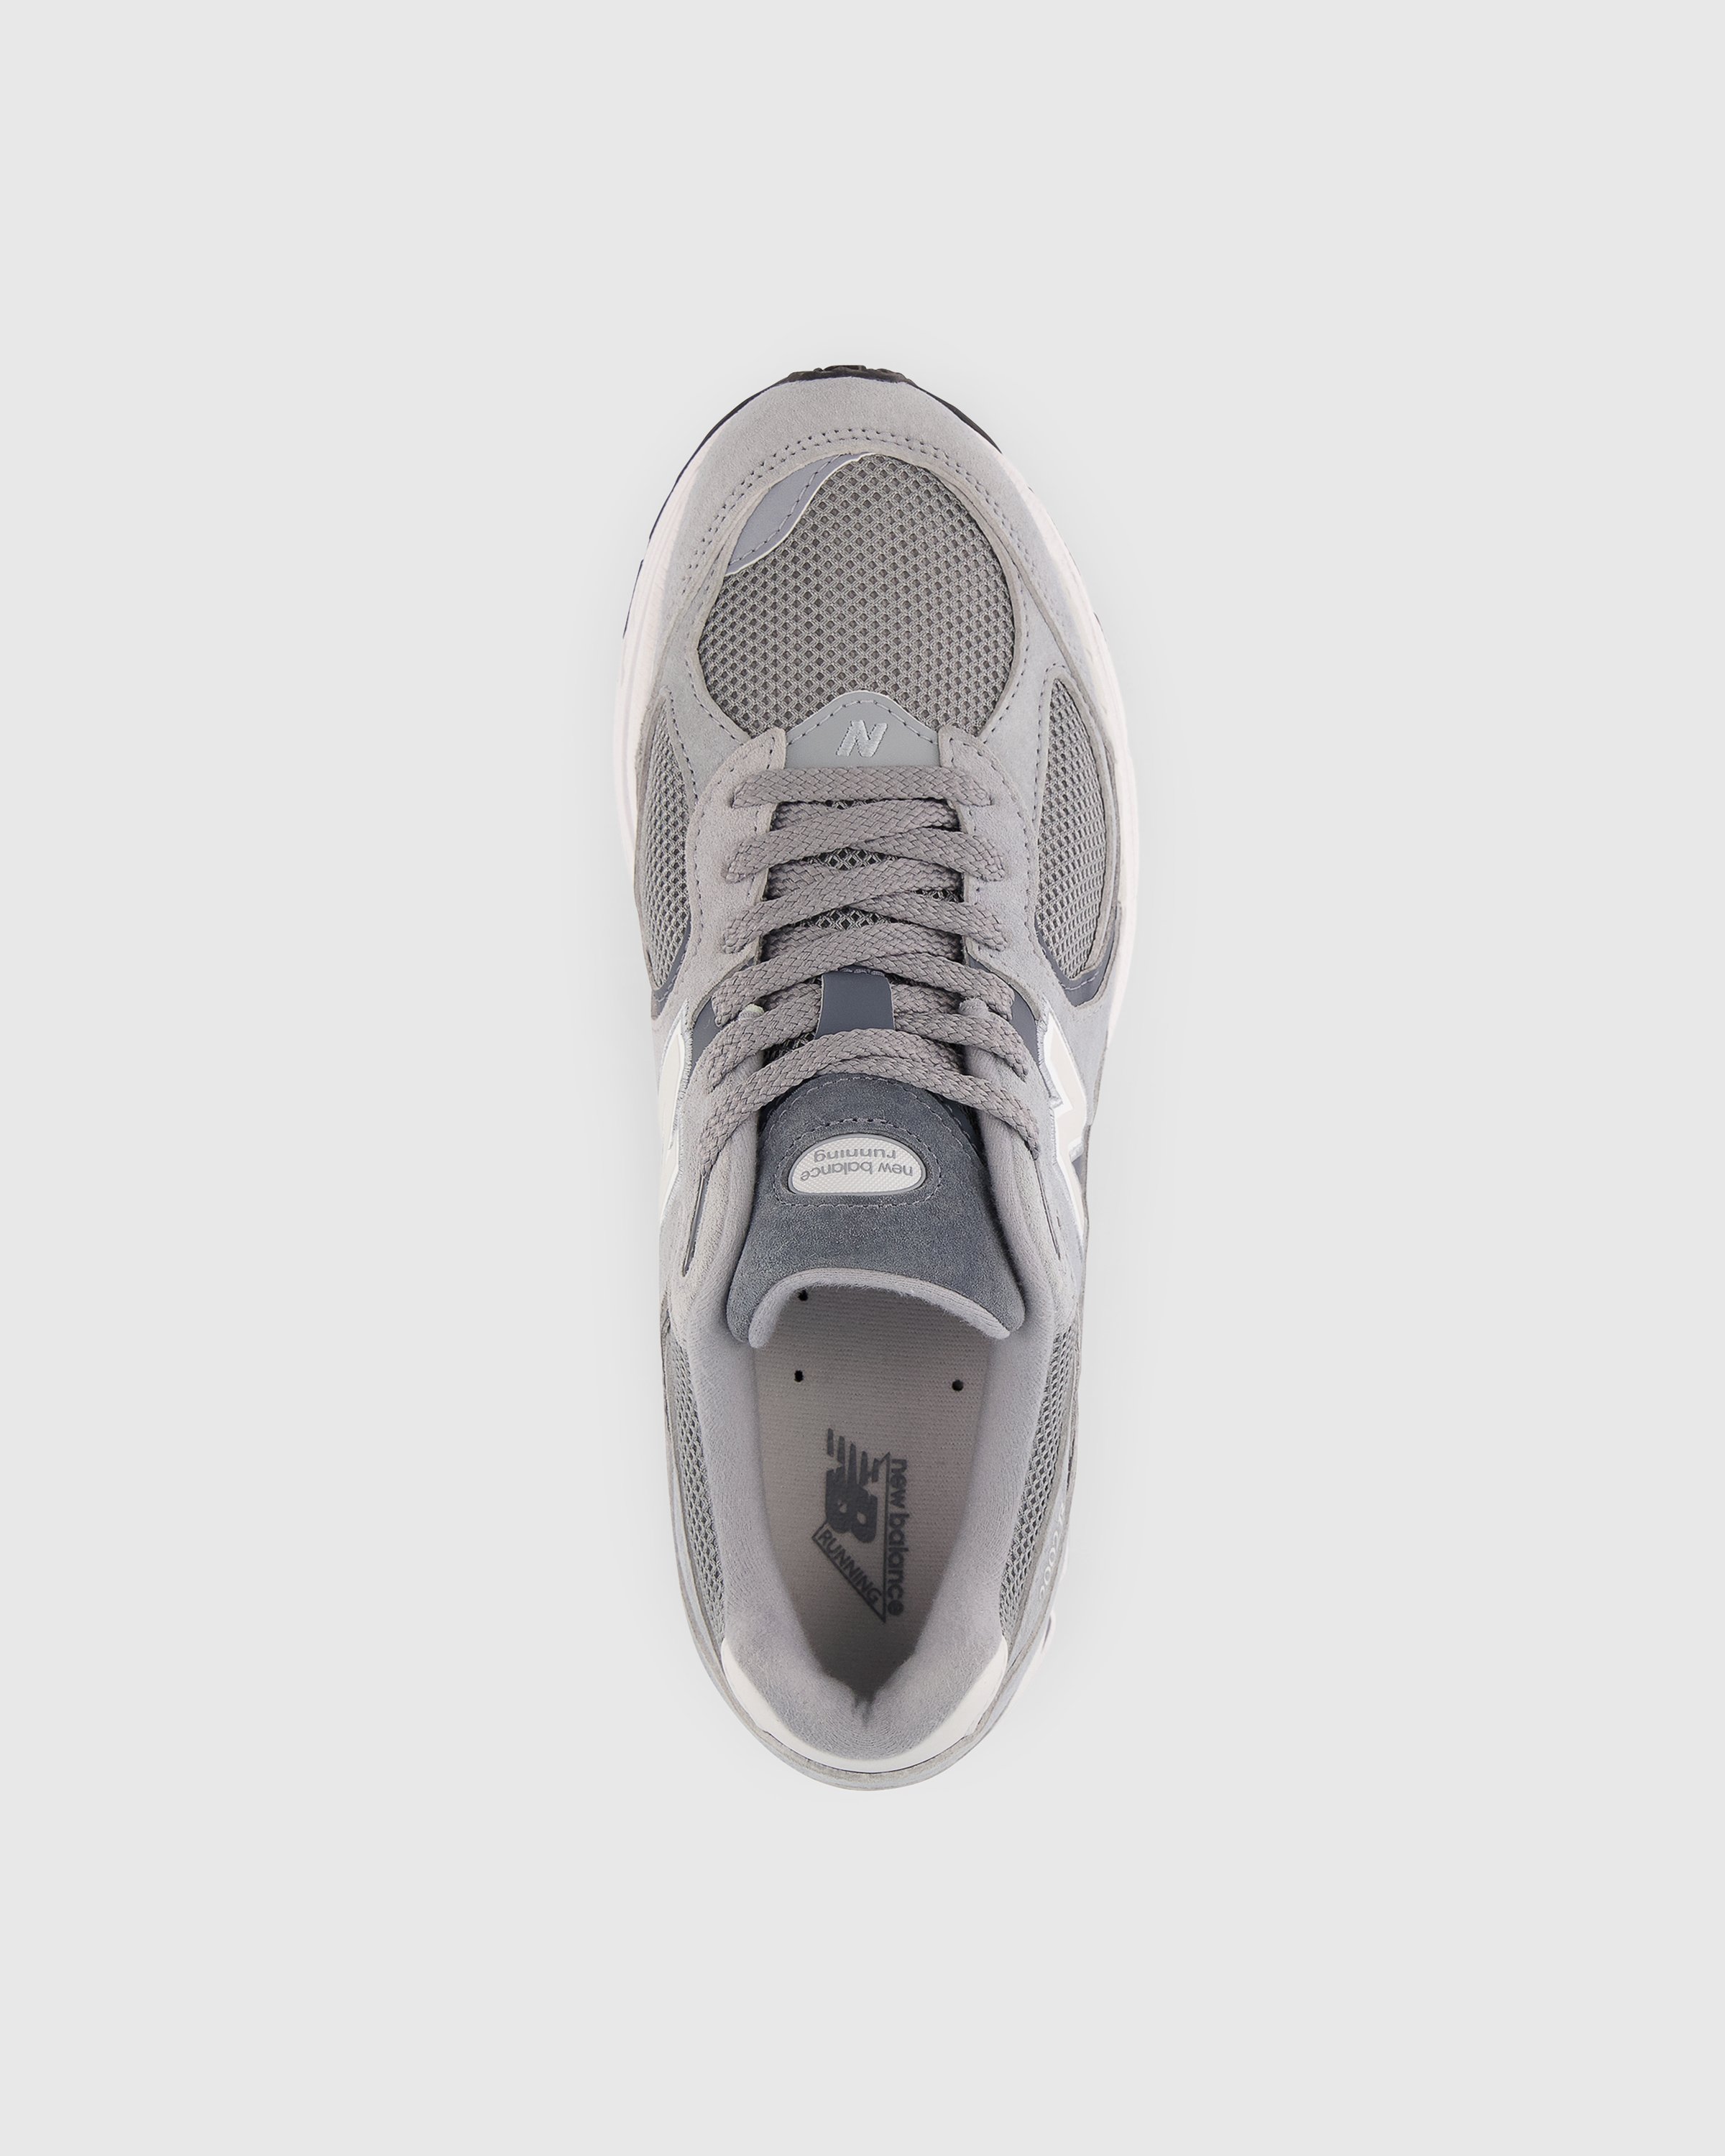 New Balance - M2002RST STEEL - Footwear - Grey - Image 4